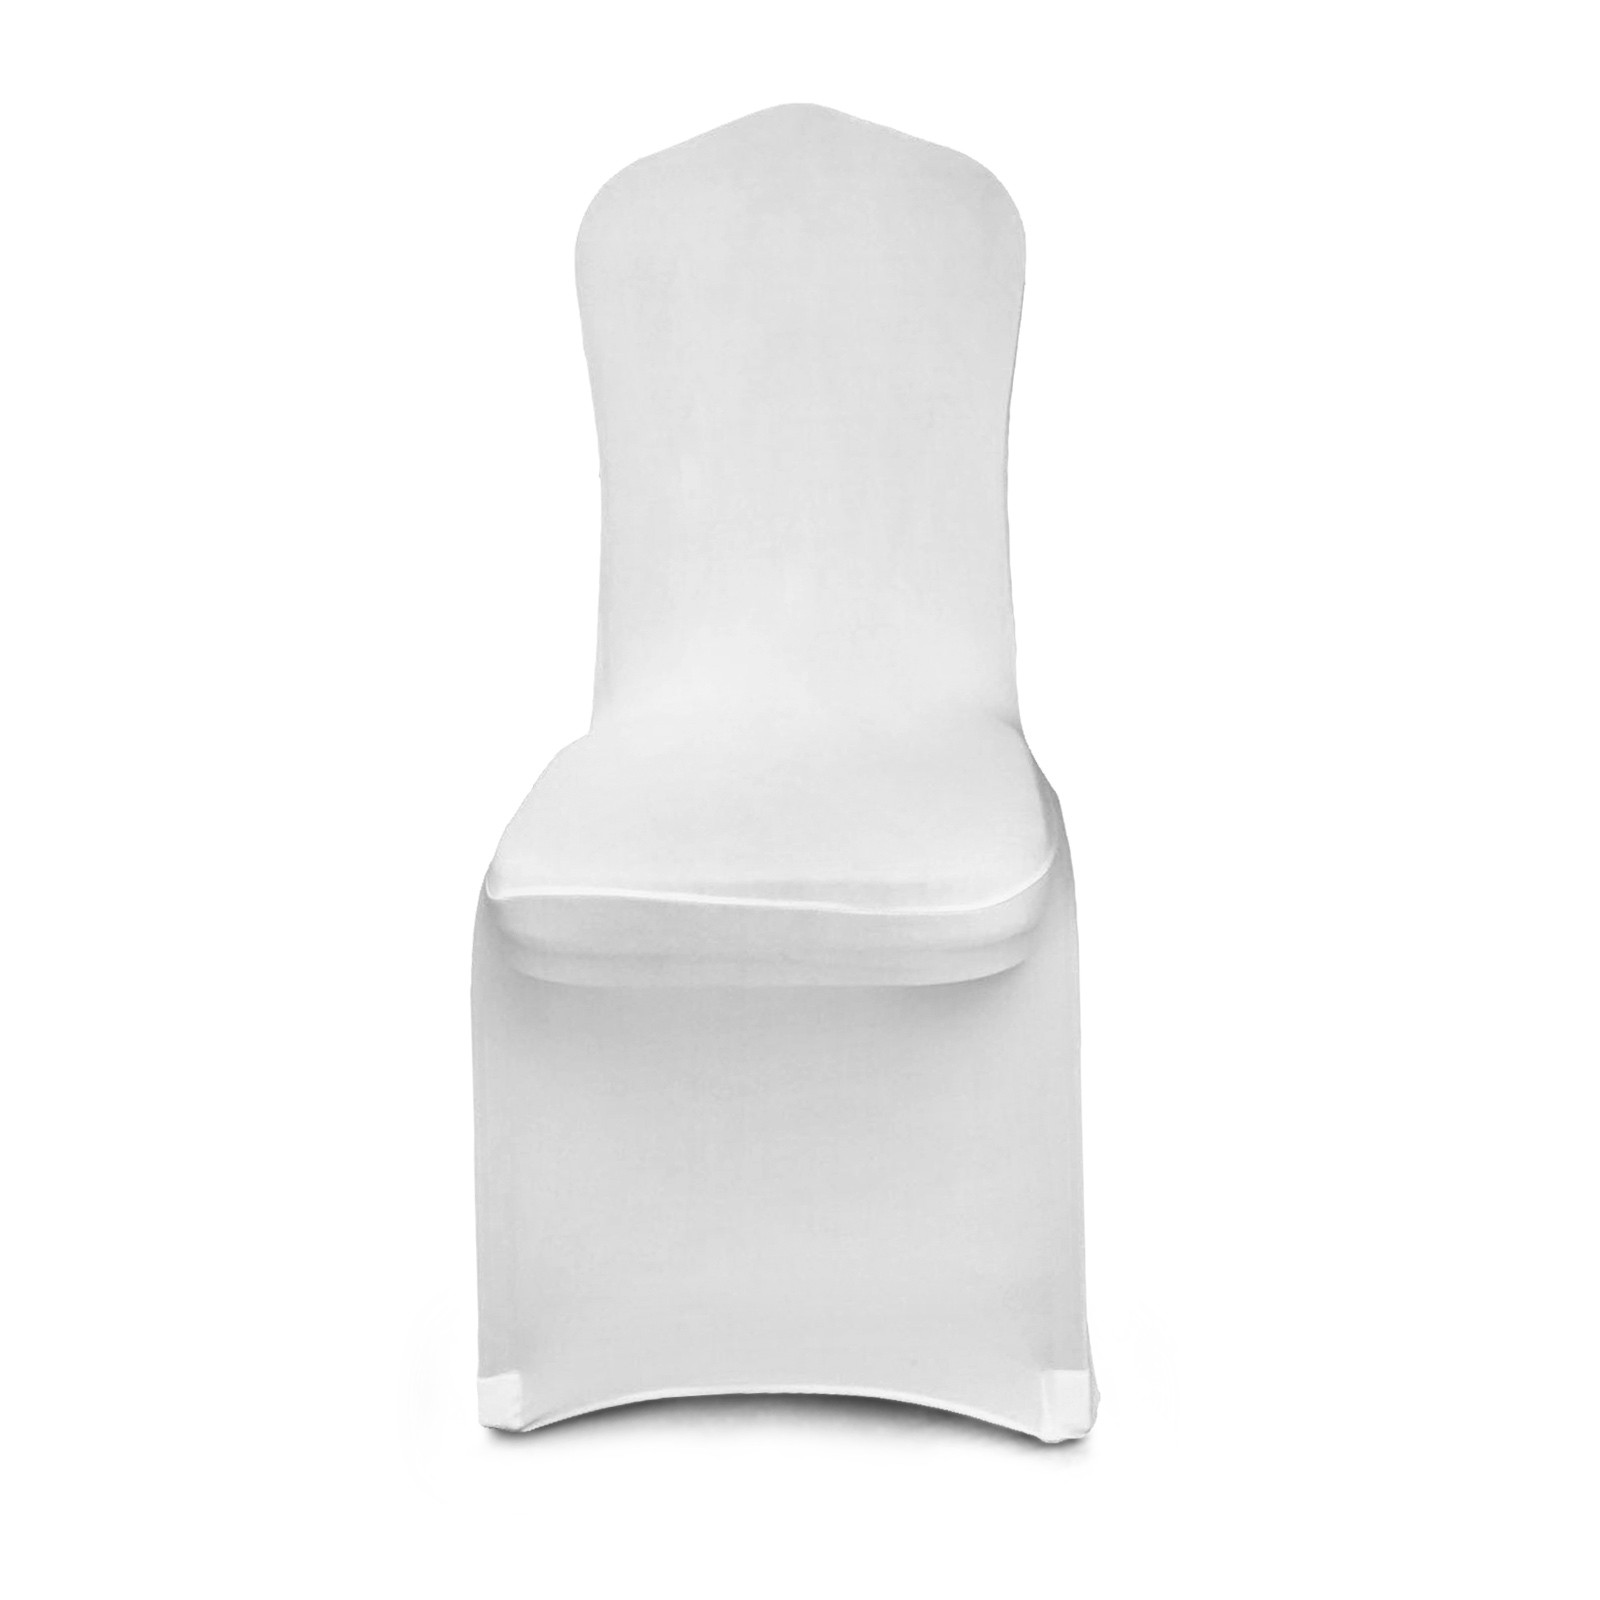  Frienda Chair Cover Stretch Spandex Chair Slipcovers